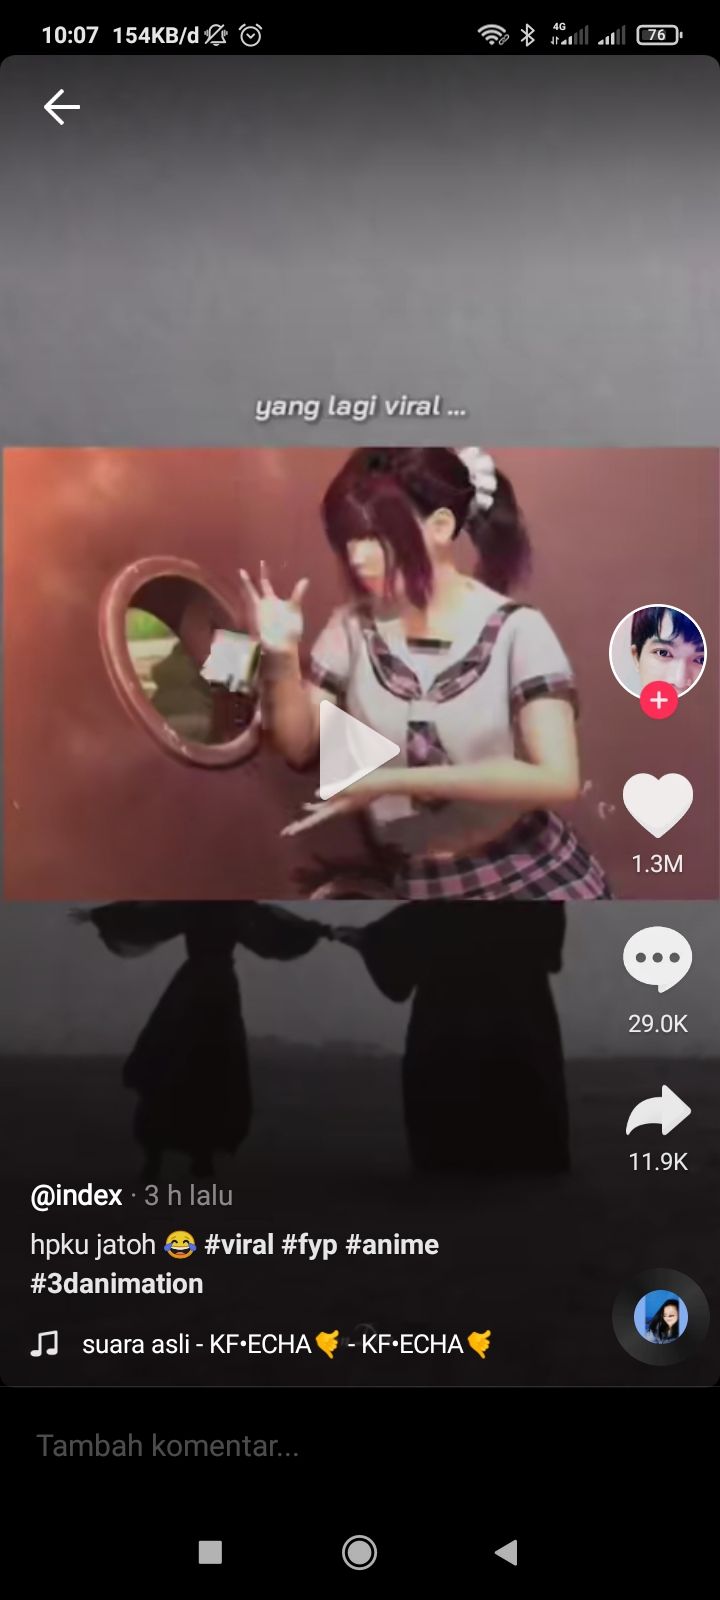 Video Stuck In The Wall Girl 3d Animation Rina And The Hole Viral Tesebar Di Tiktok Anime Hp Jatuh Metro Lampung News